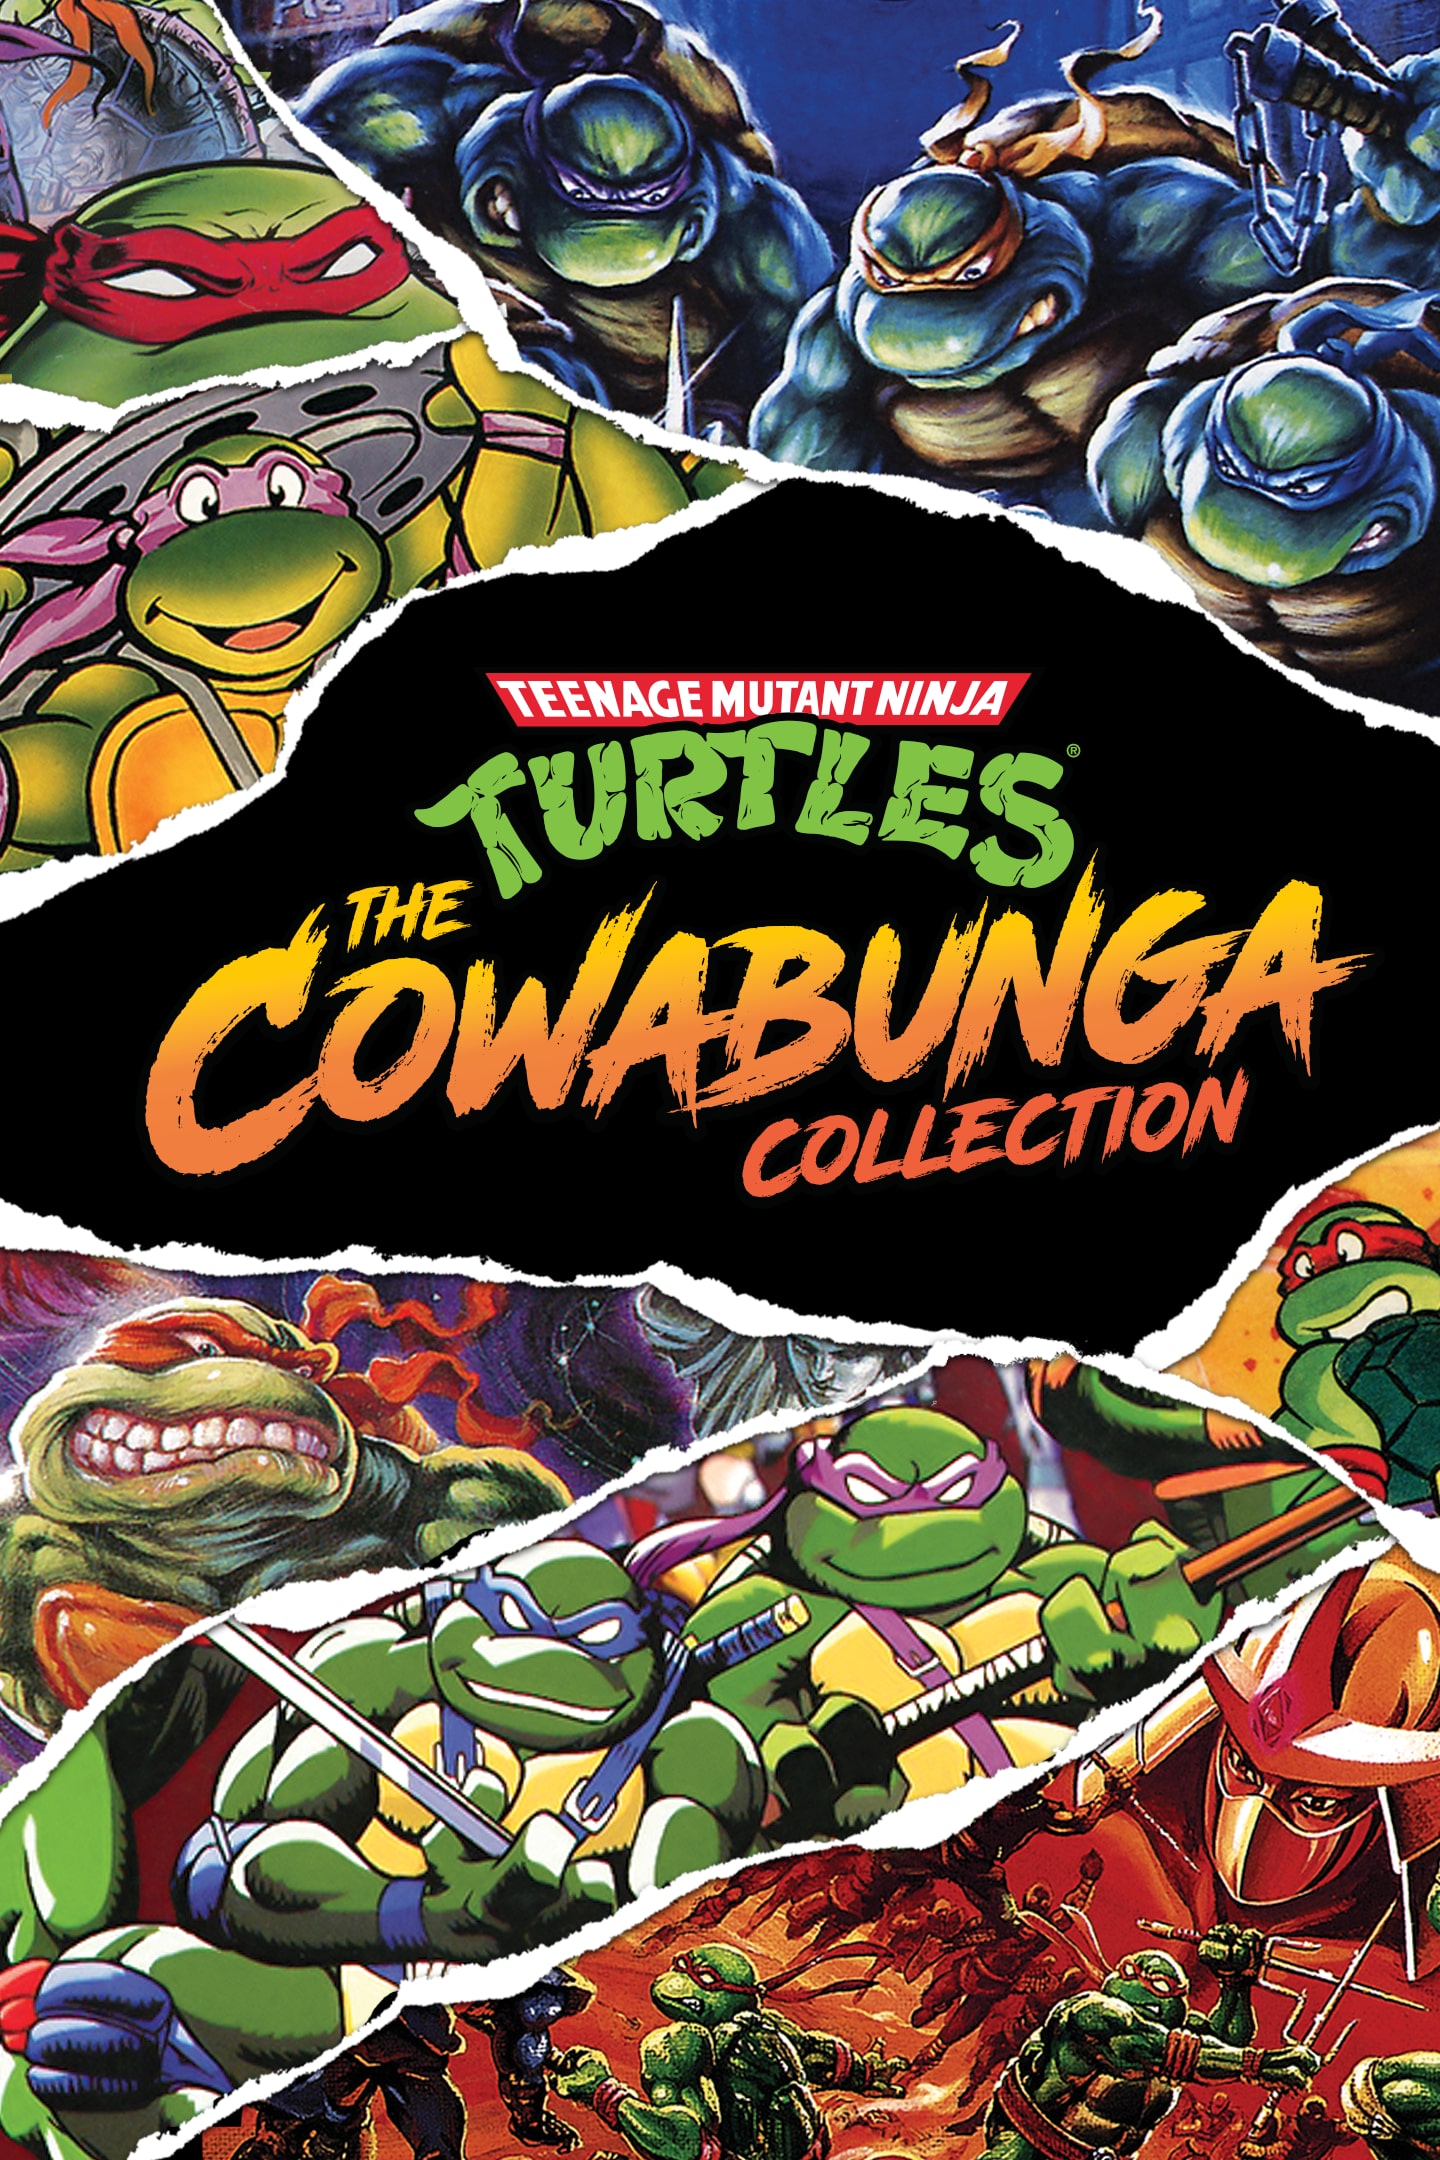 Teenage Mutant Ninja Turtles: PS4 PS5 & The Cowabunga Collection